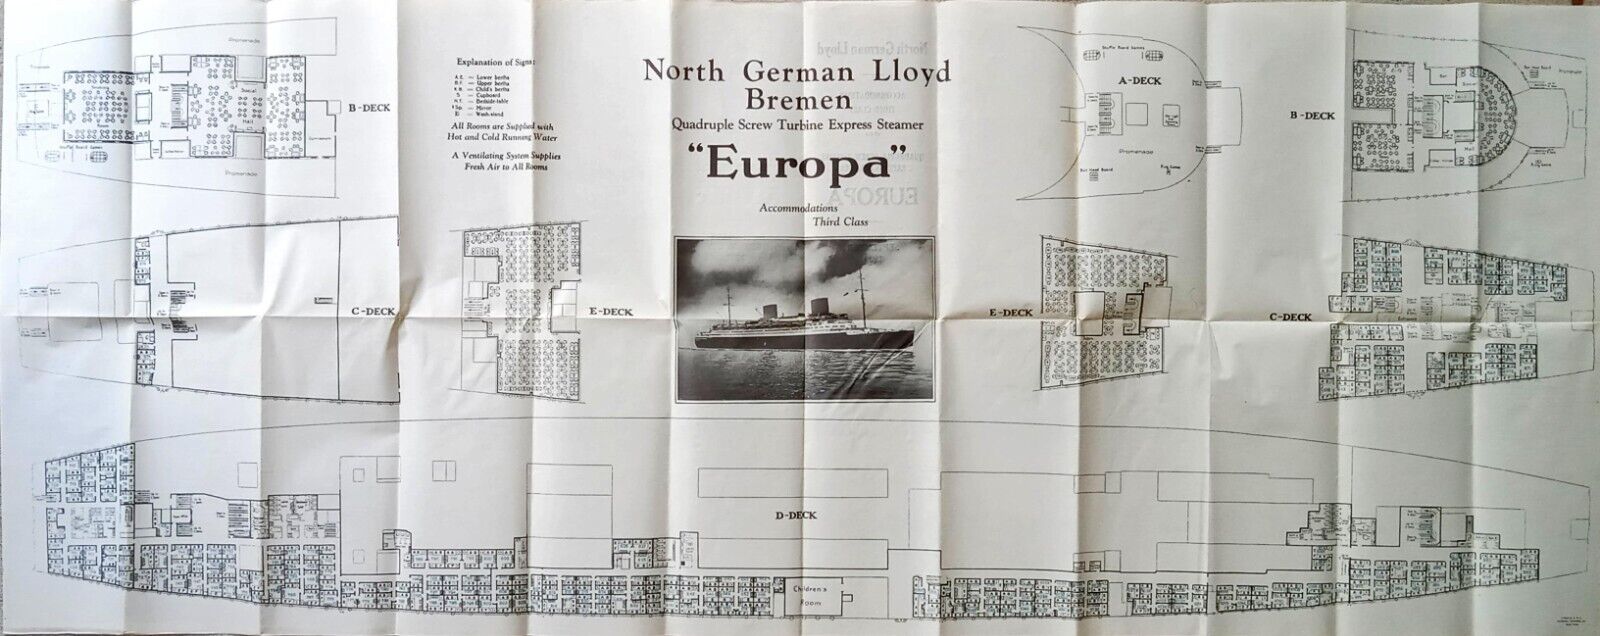 SS EUROPA North German Lloyd Line Third Class Accommodations Deck Plan 9/1934